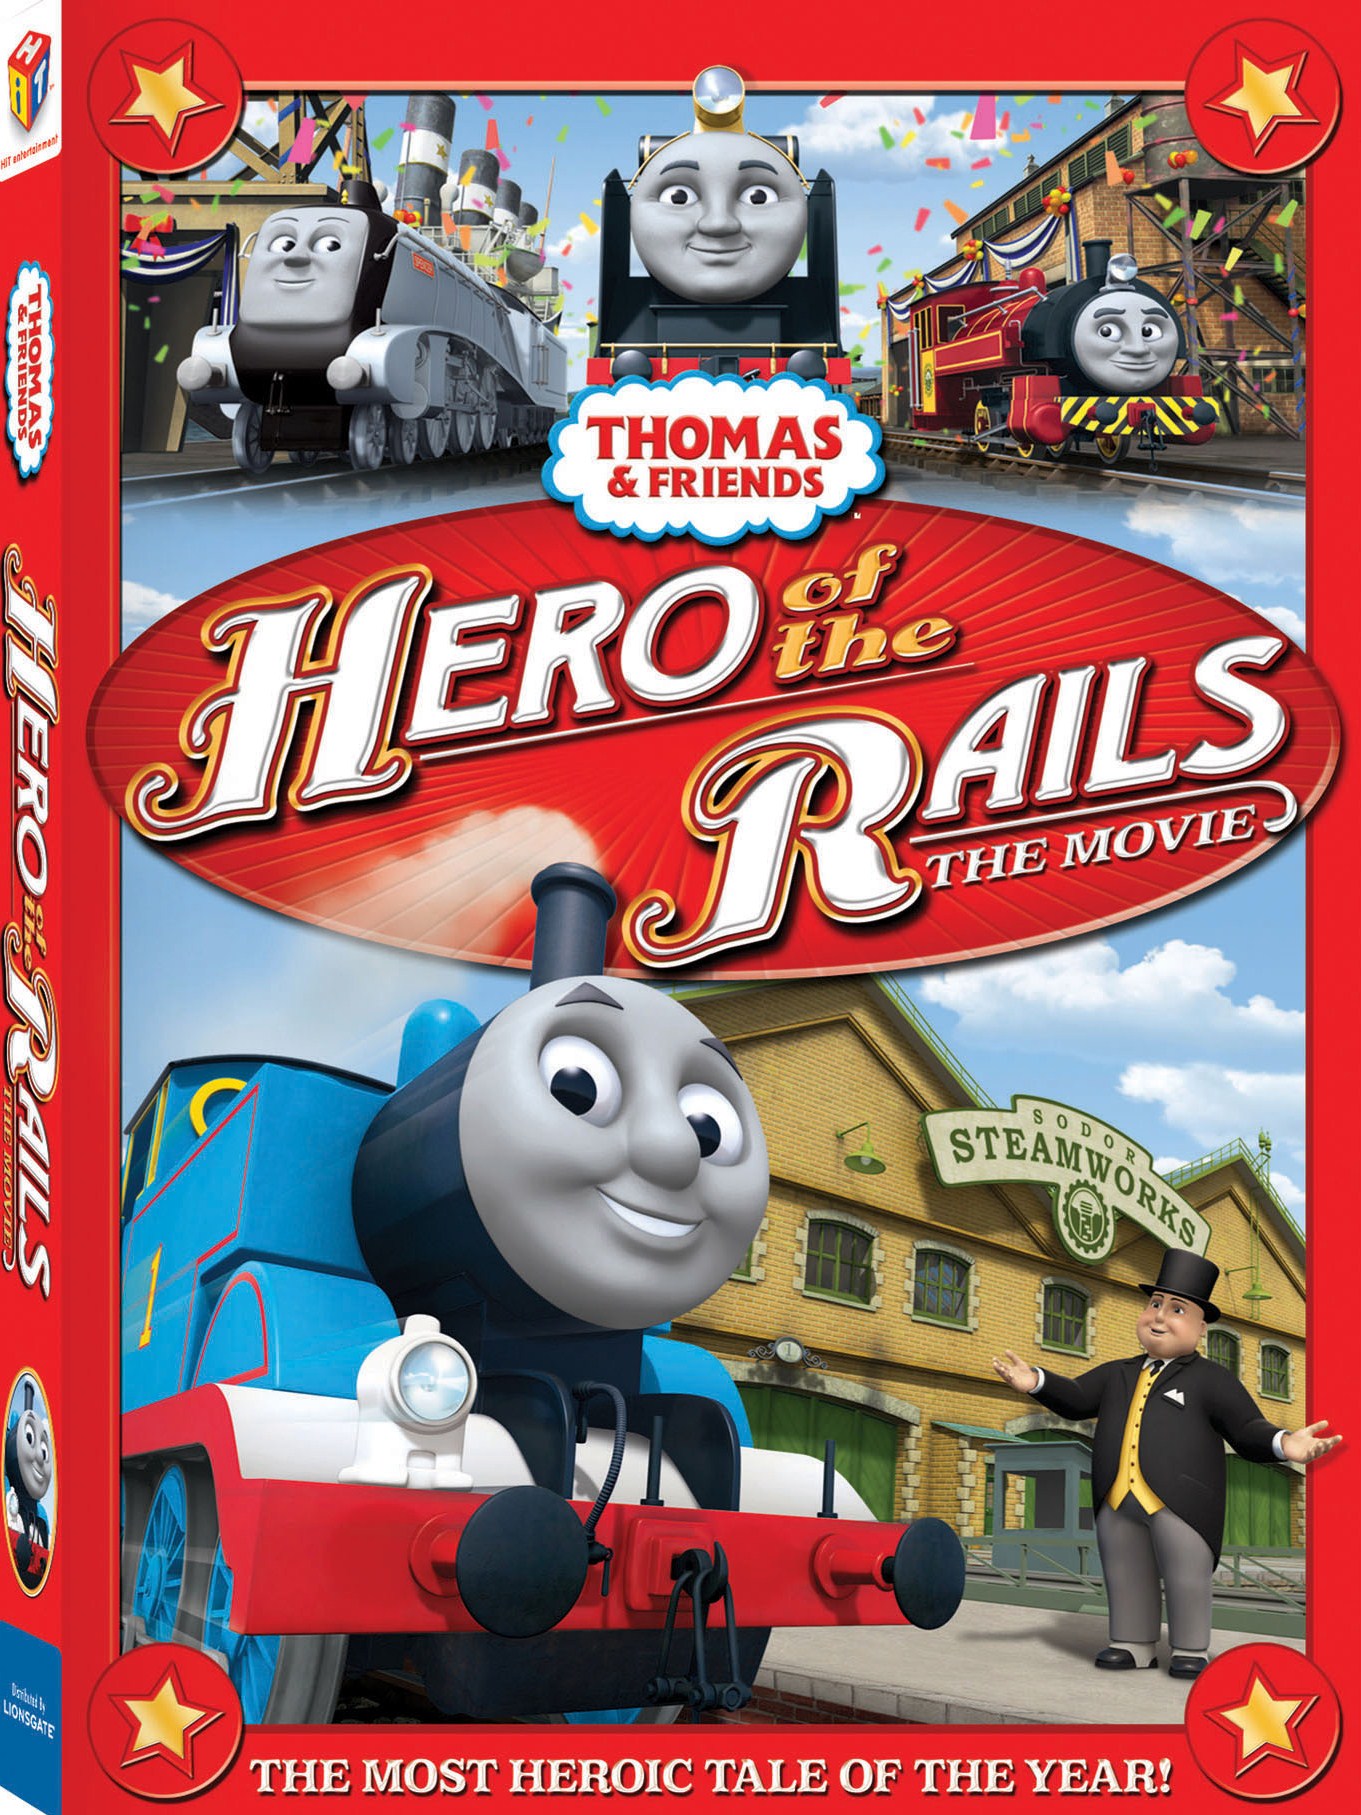 trackmaster hiro of the rails